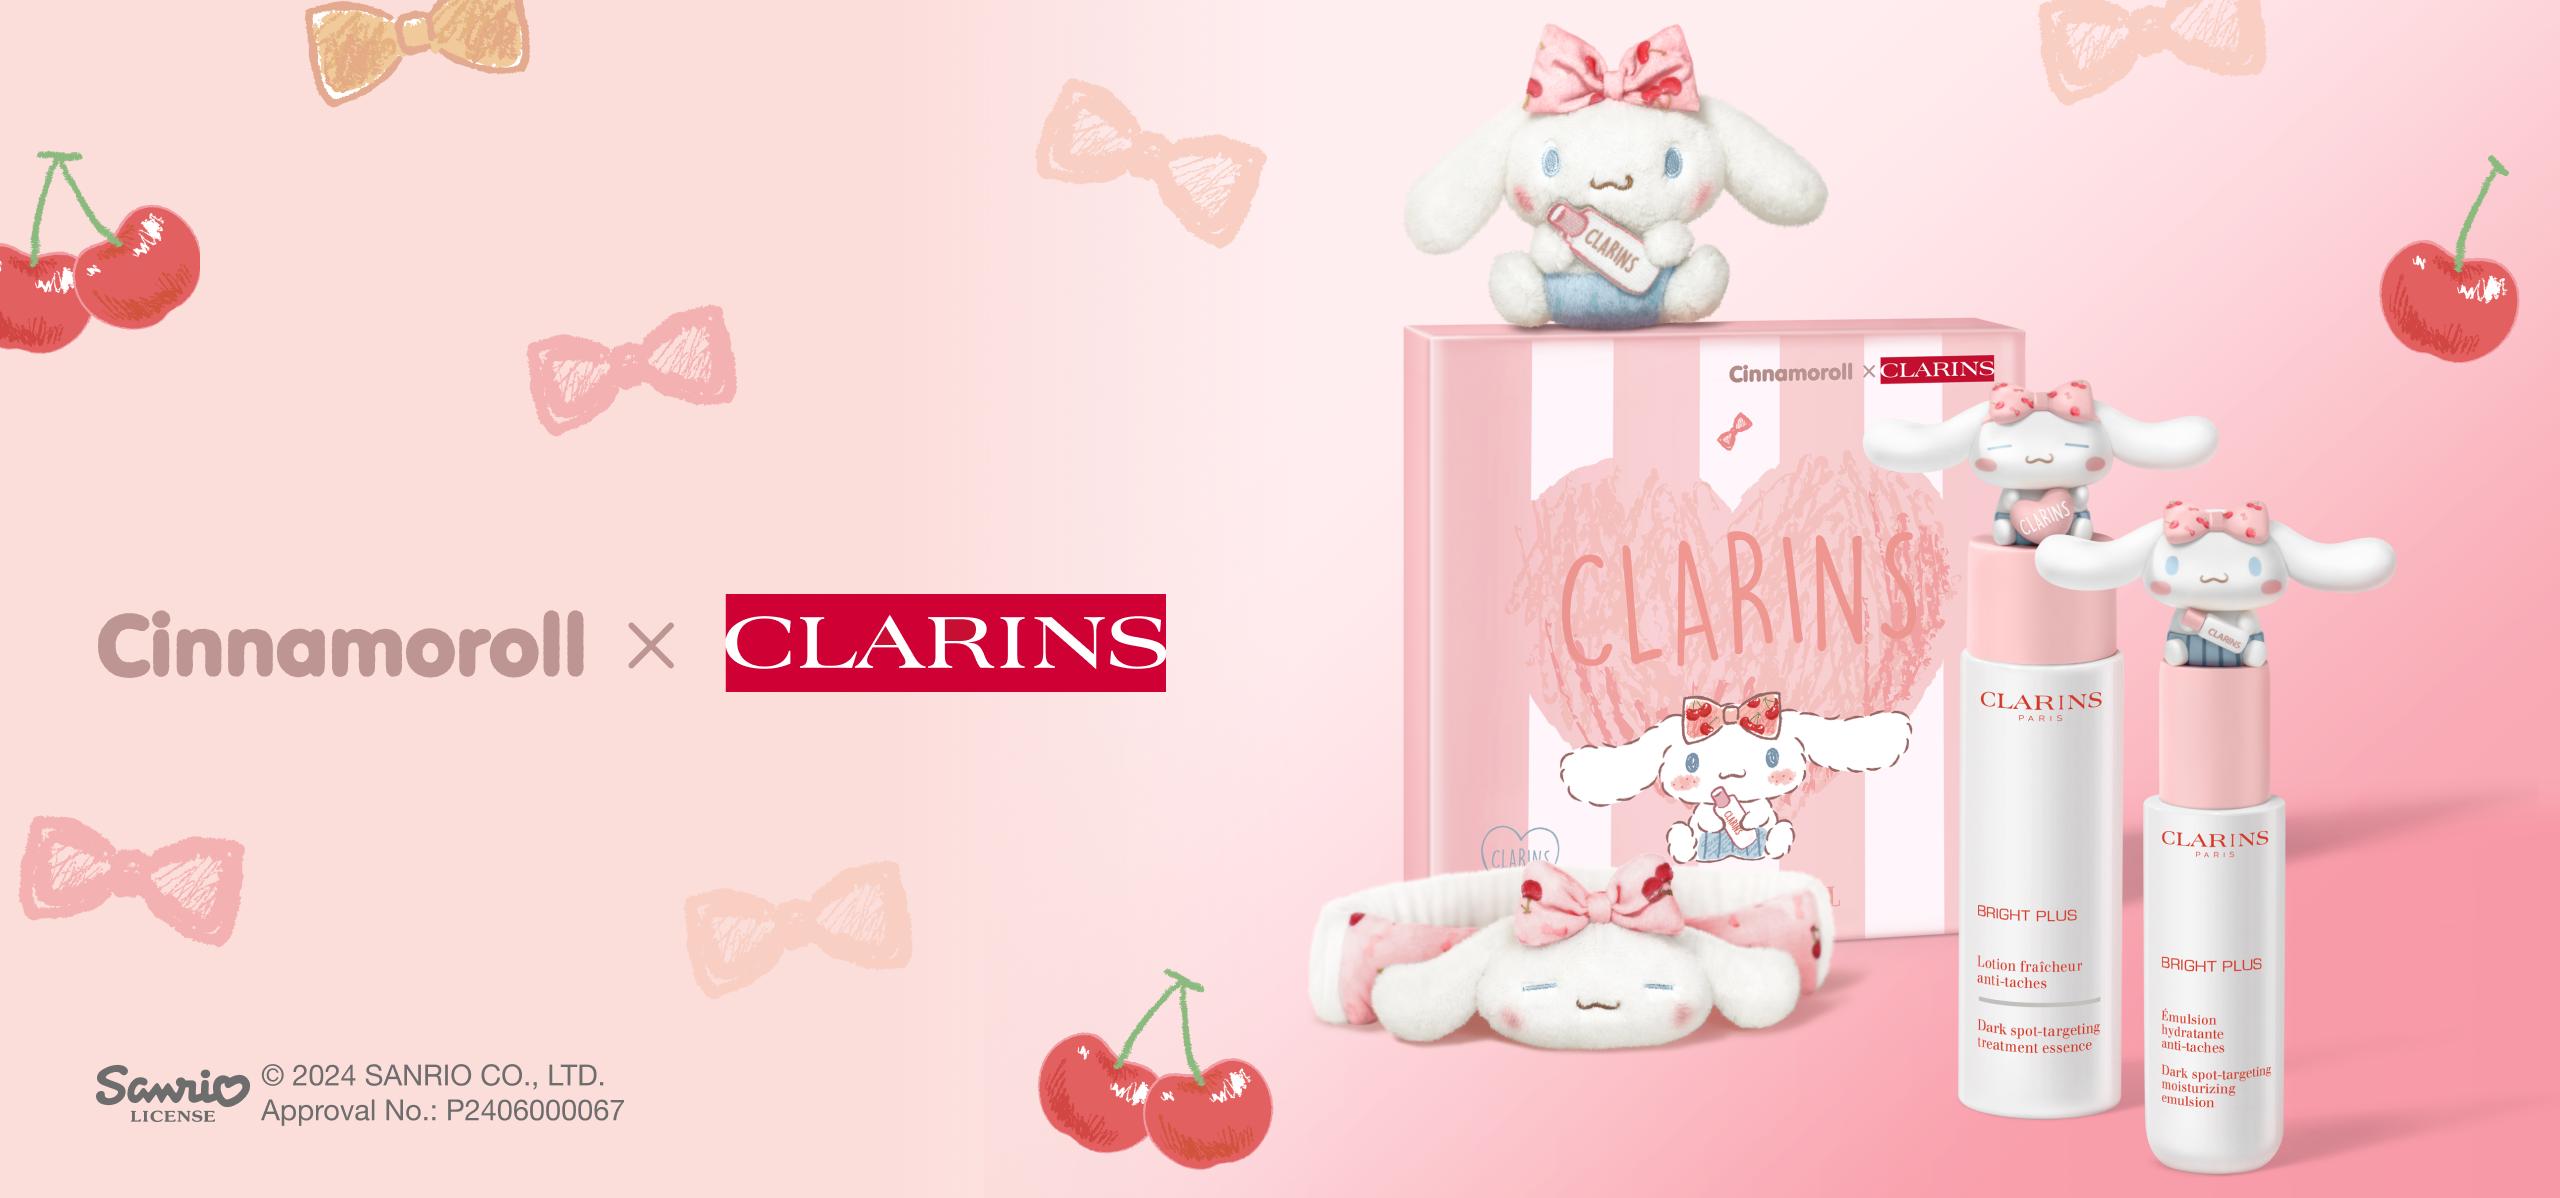 Clarins x Cinnamoroll Bright Plus Limited Edition Kit